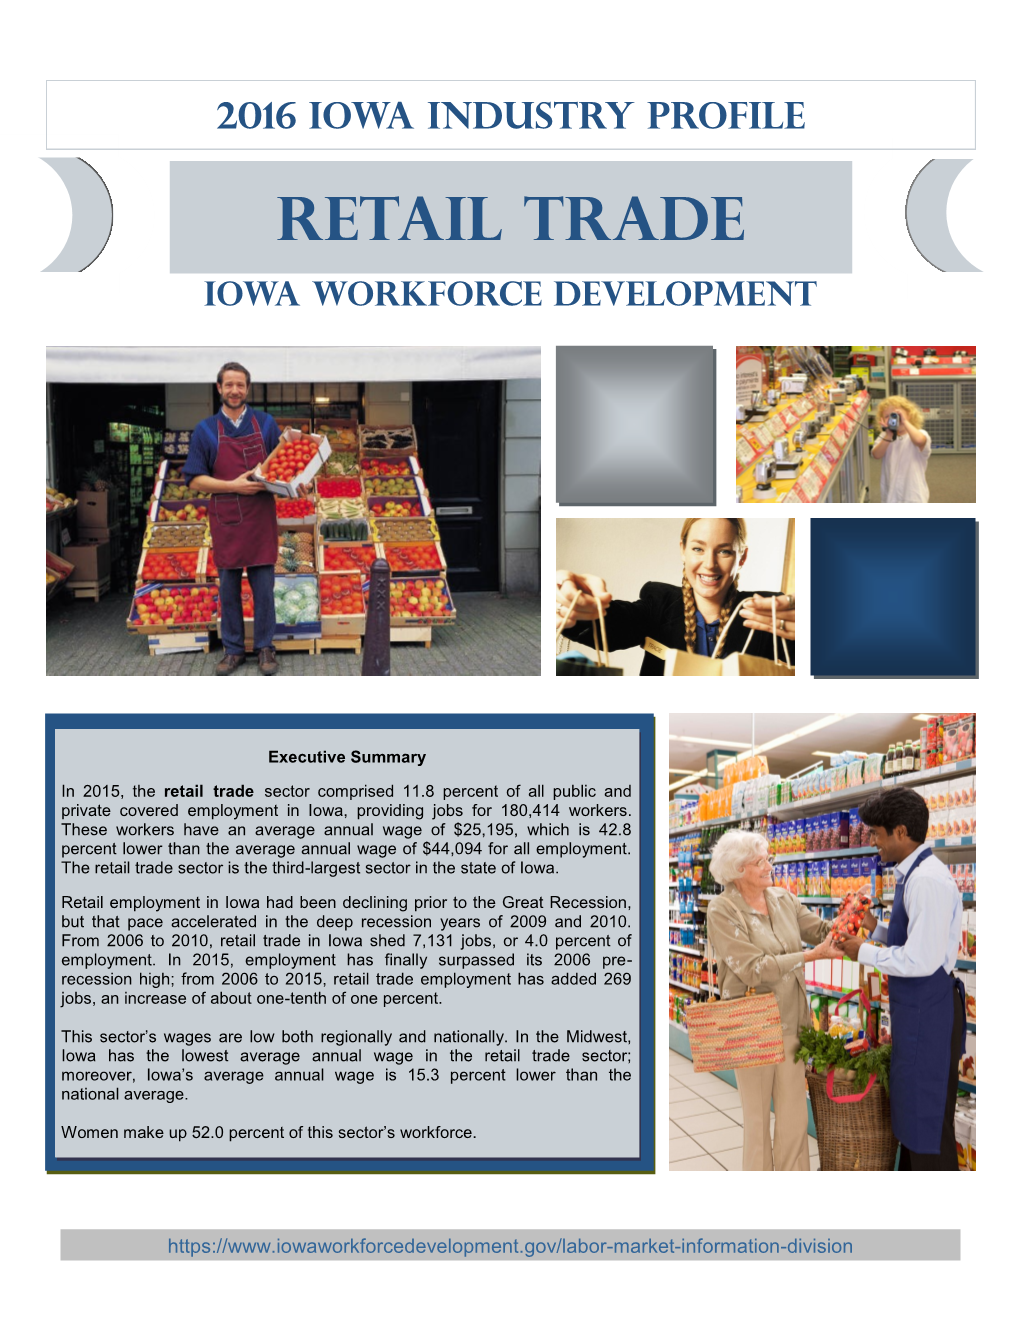 Iowa Retail Trade Industry Profile